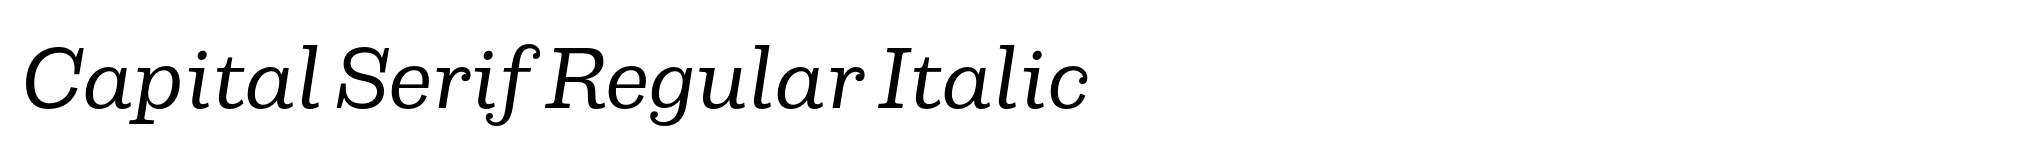 Capital Serif Regular Italic image